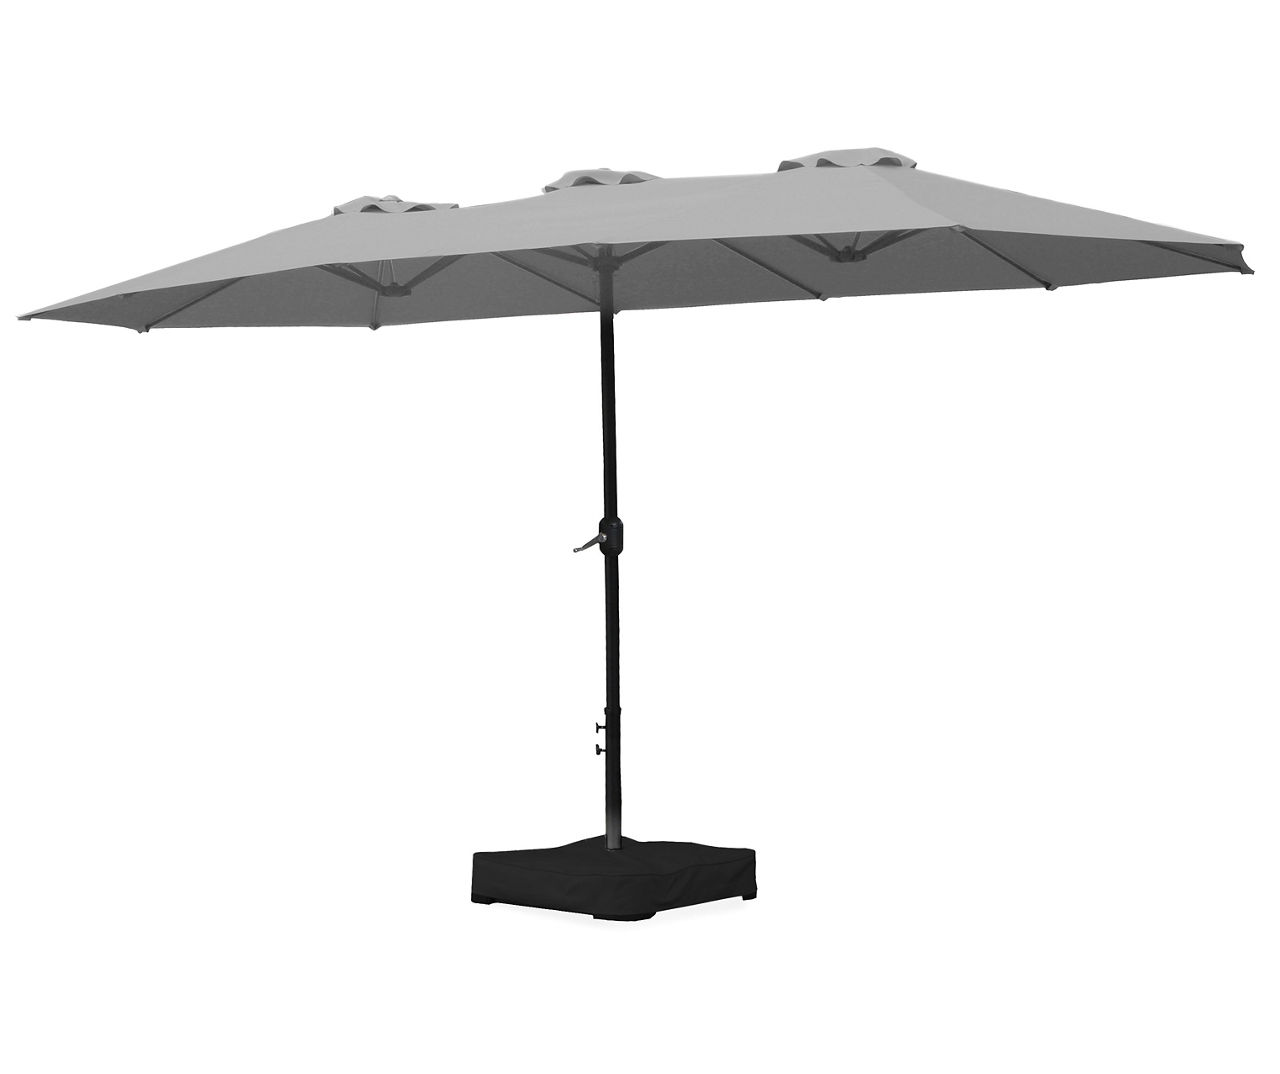 15' Gray Triple Vent Market Patio Umbrella with Base